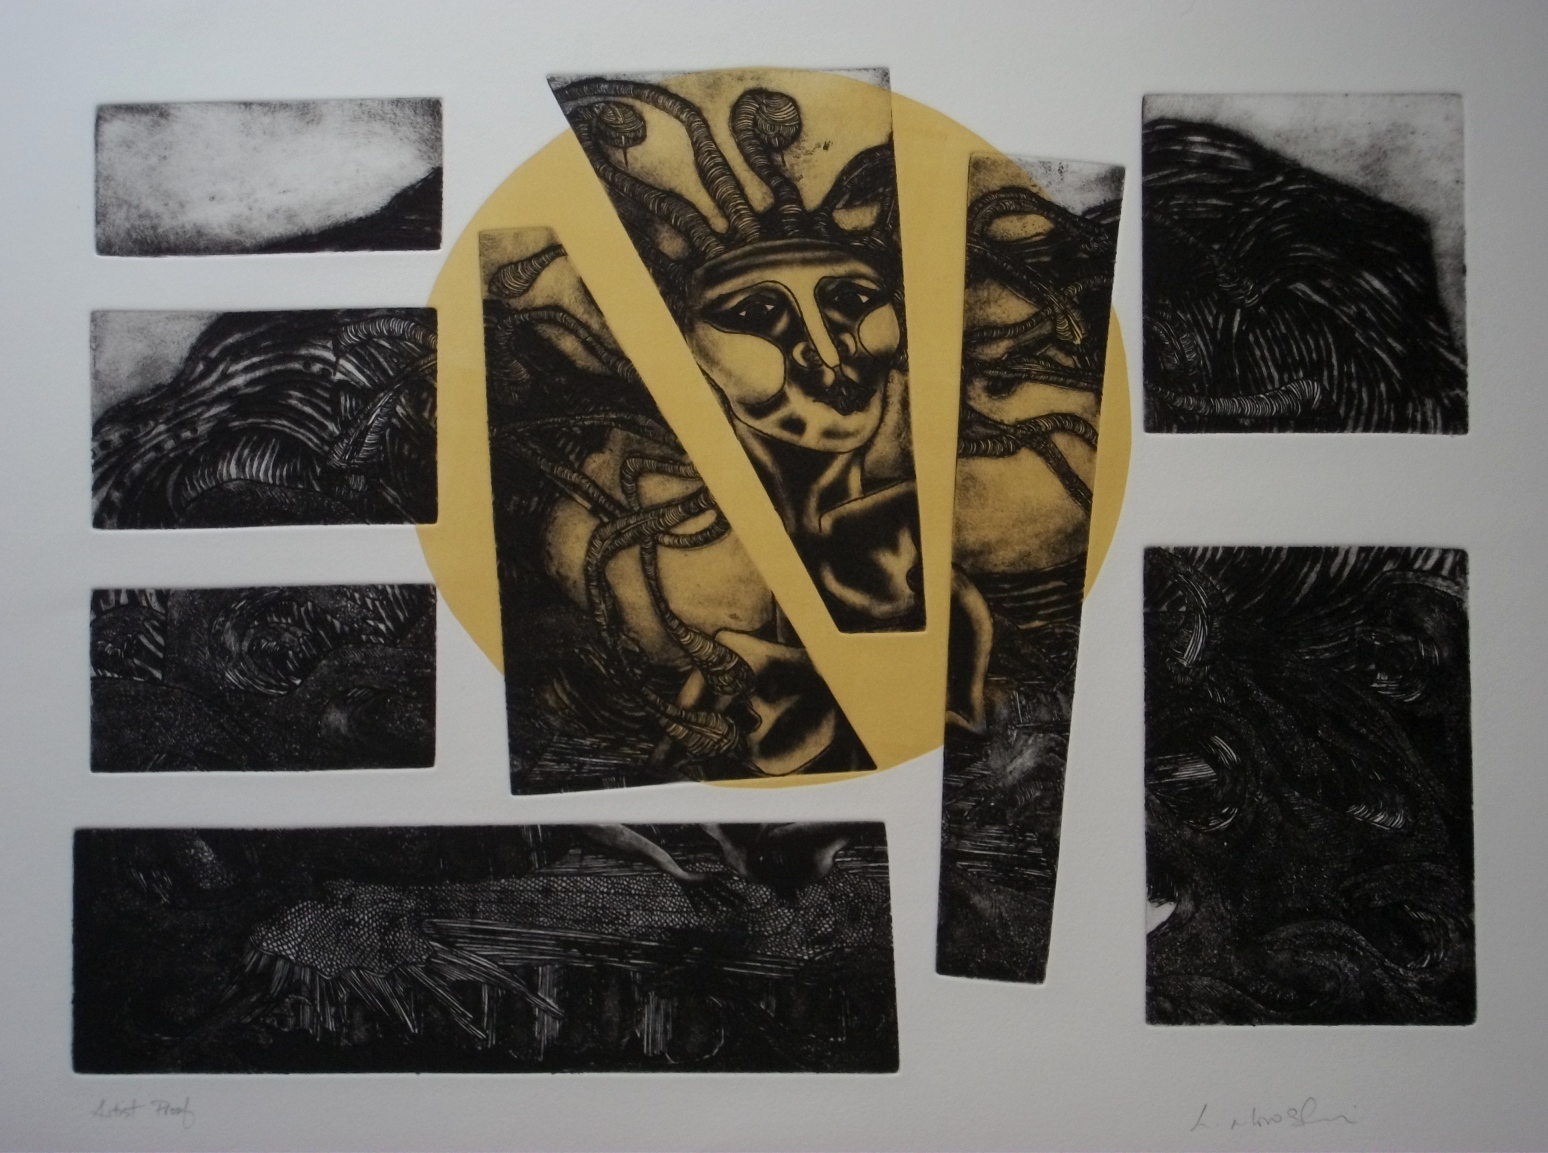 Fragmented Medusa etching, from the Mythology series.